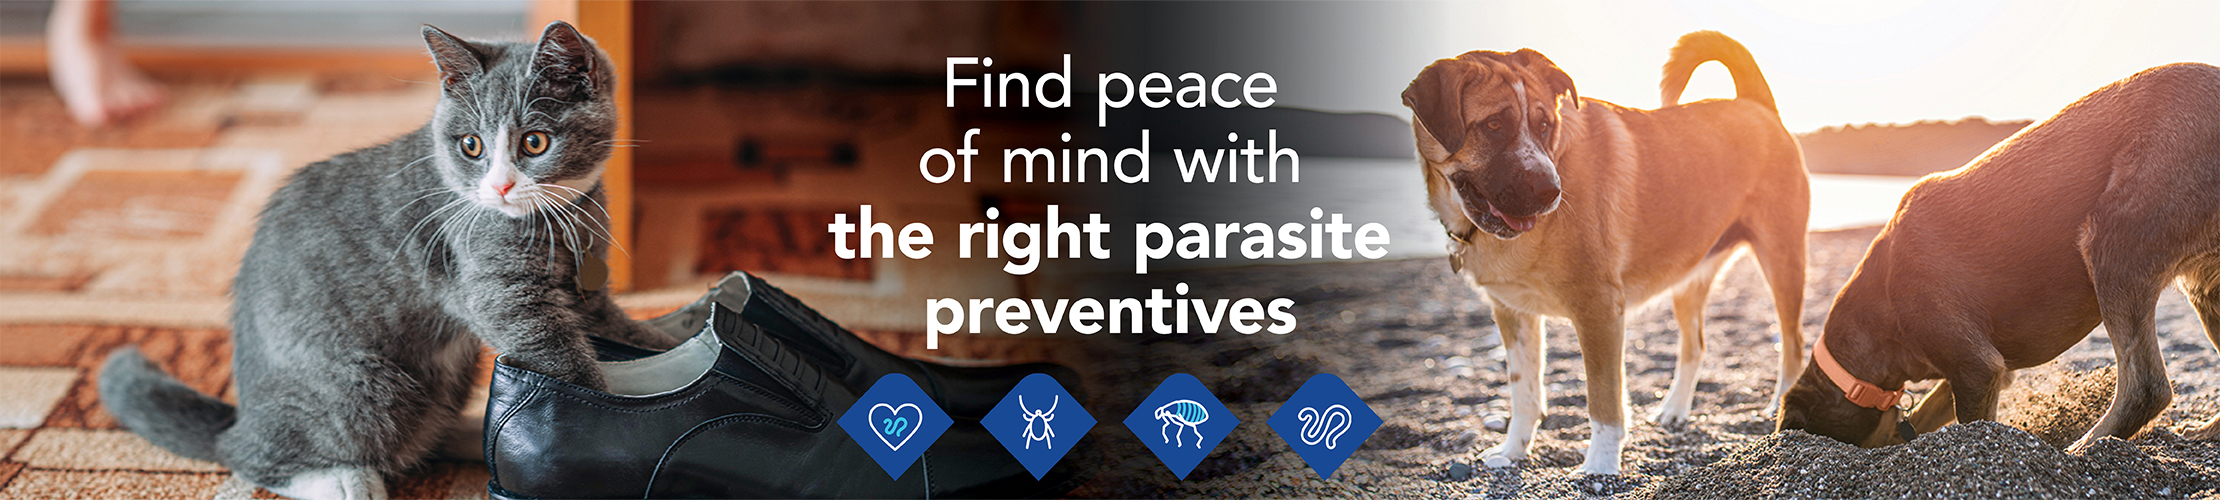 parasite prevention header image